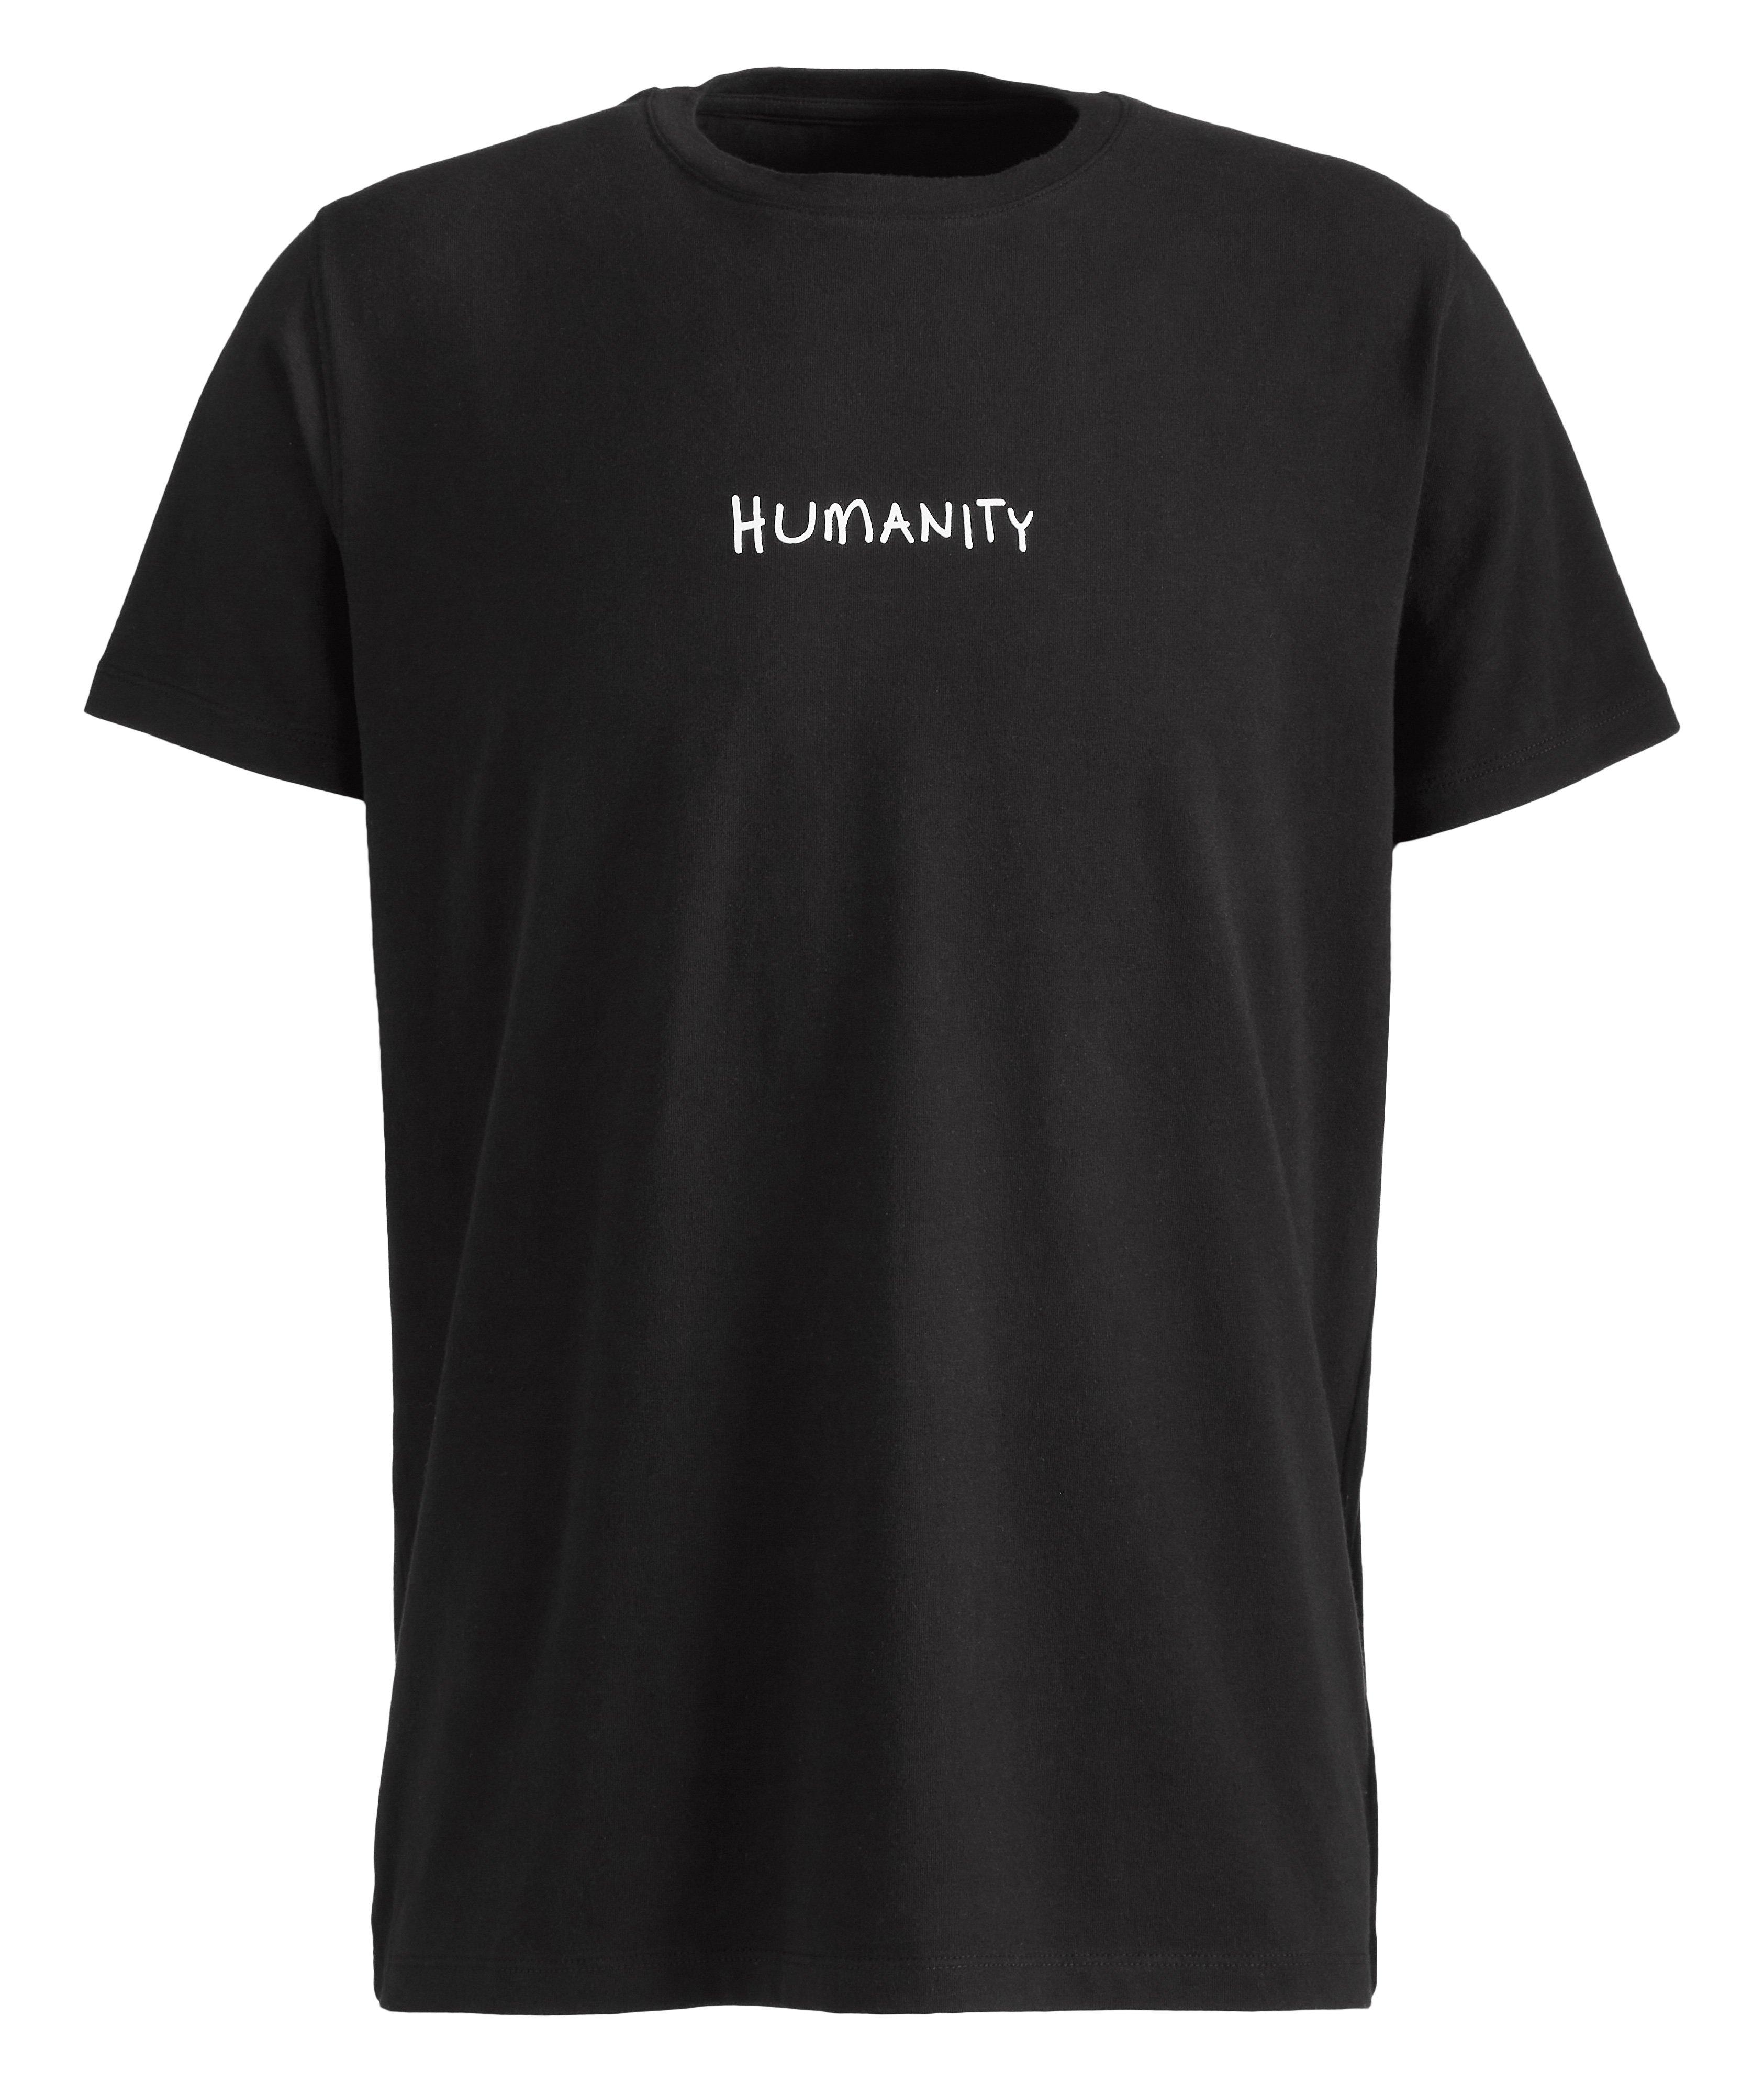 PATRICK ASSARAF T-shirt Humanity en coton extensible